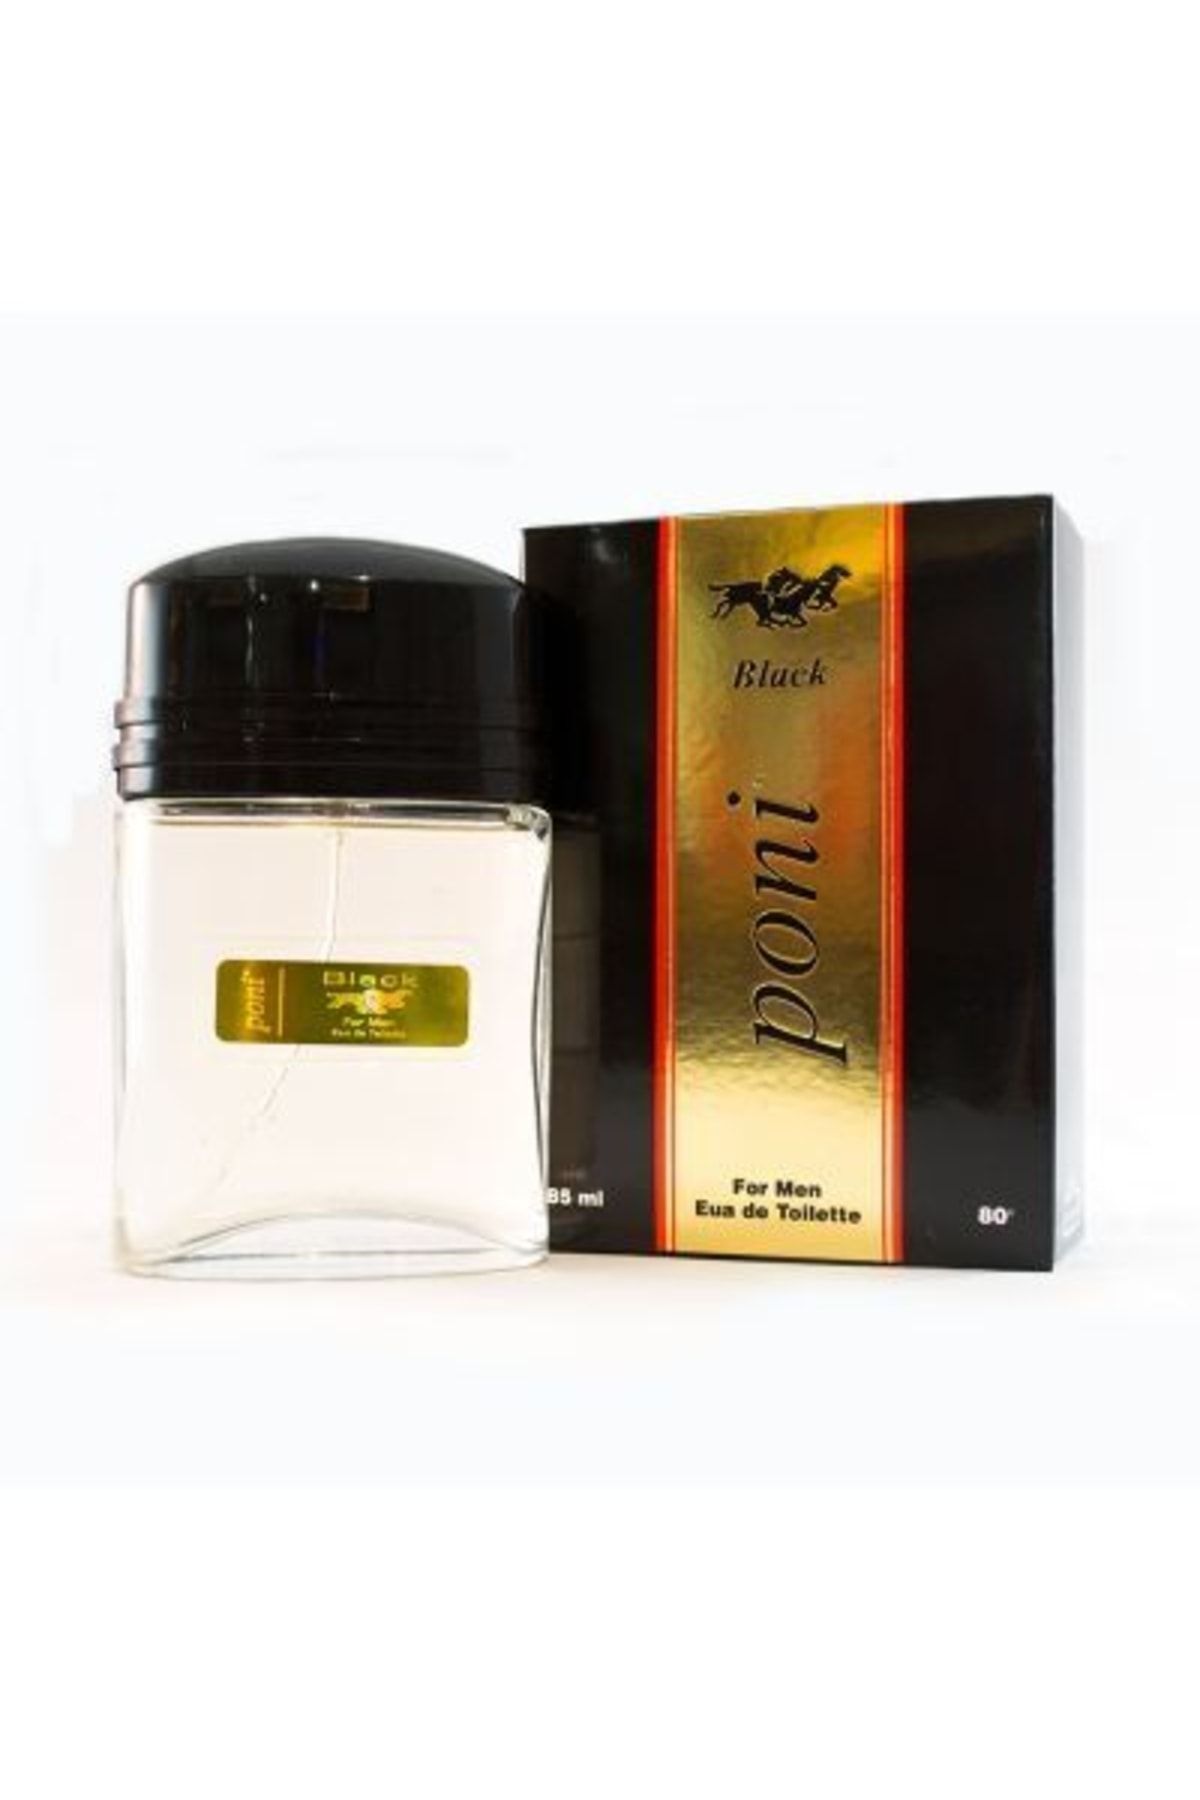 Genel Markalar Parfum Black Erkek 85 Ml X 2 Adet